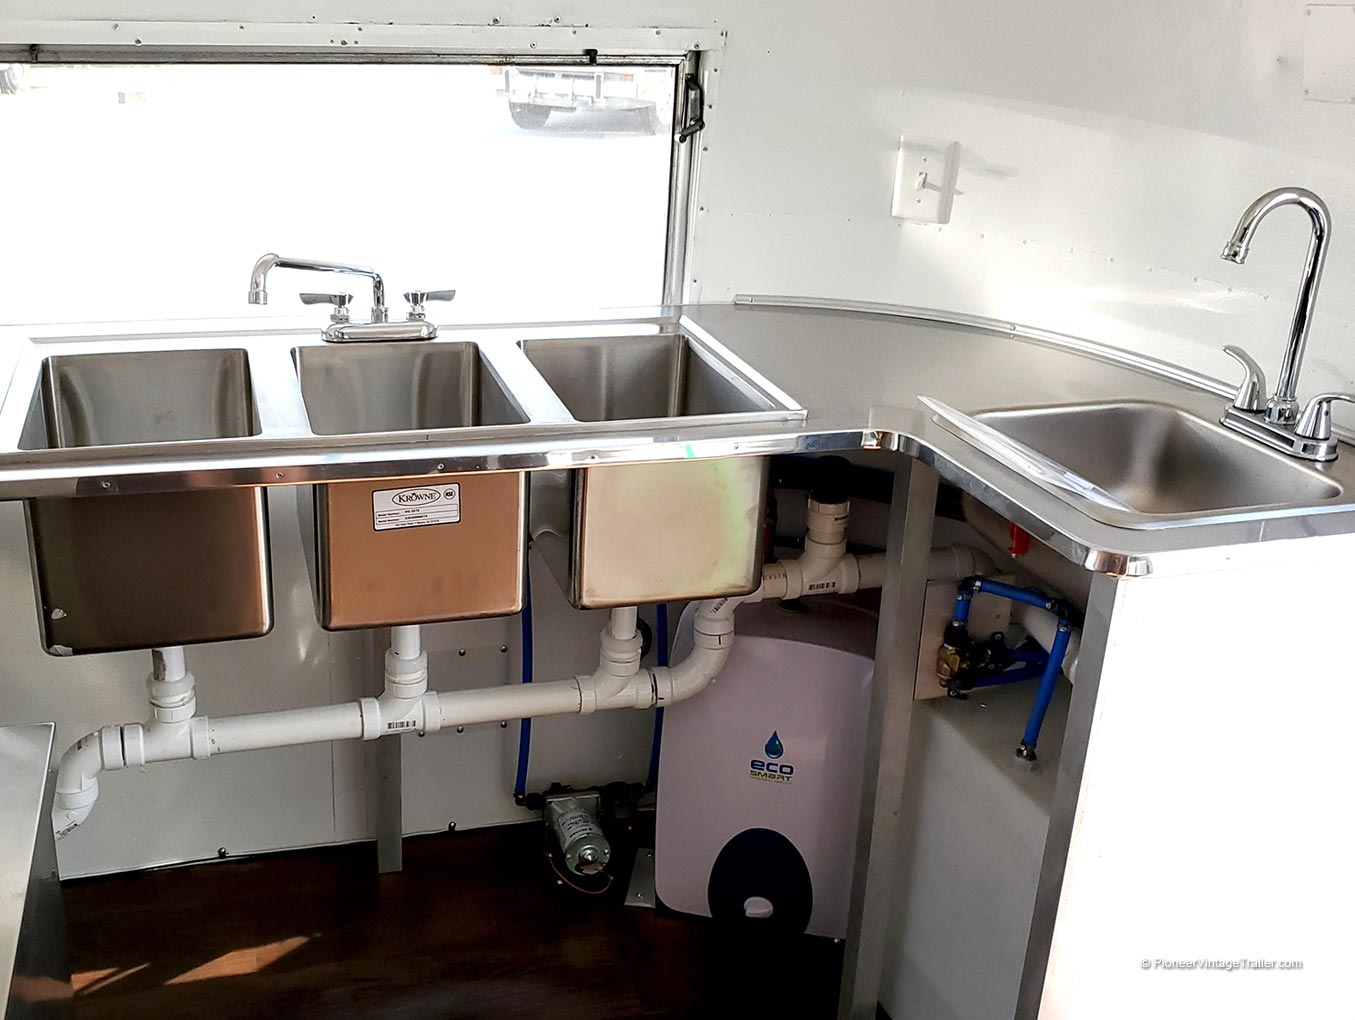 sinks / water heater in Airstream vending trailer